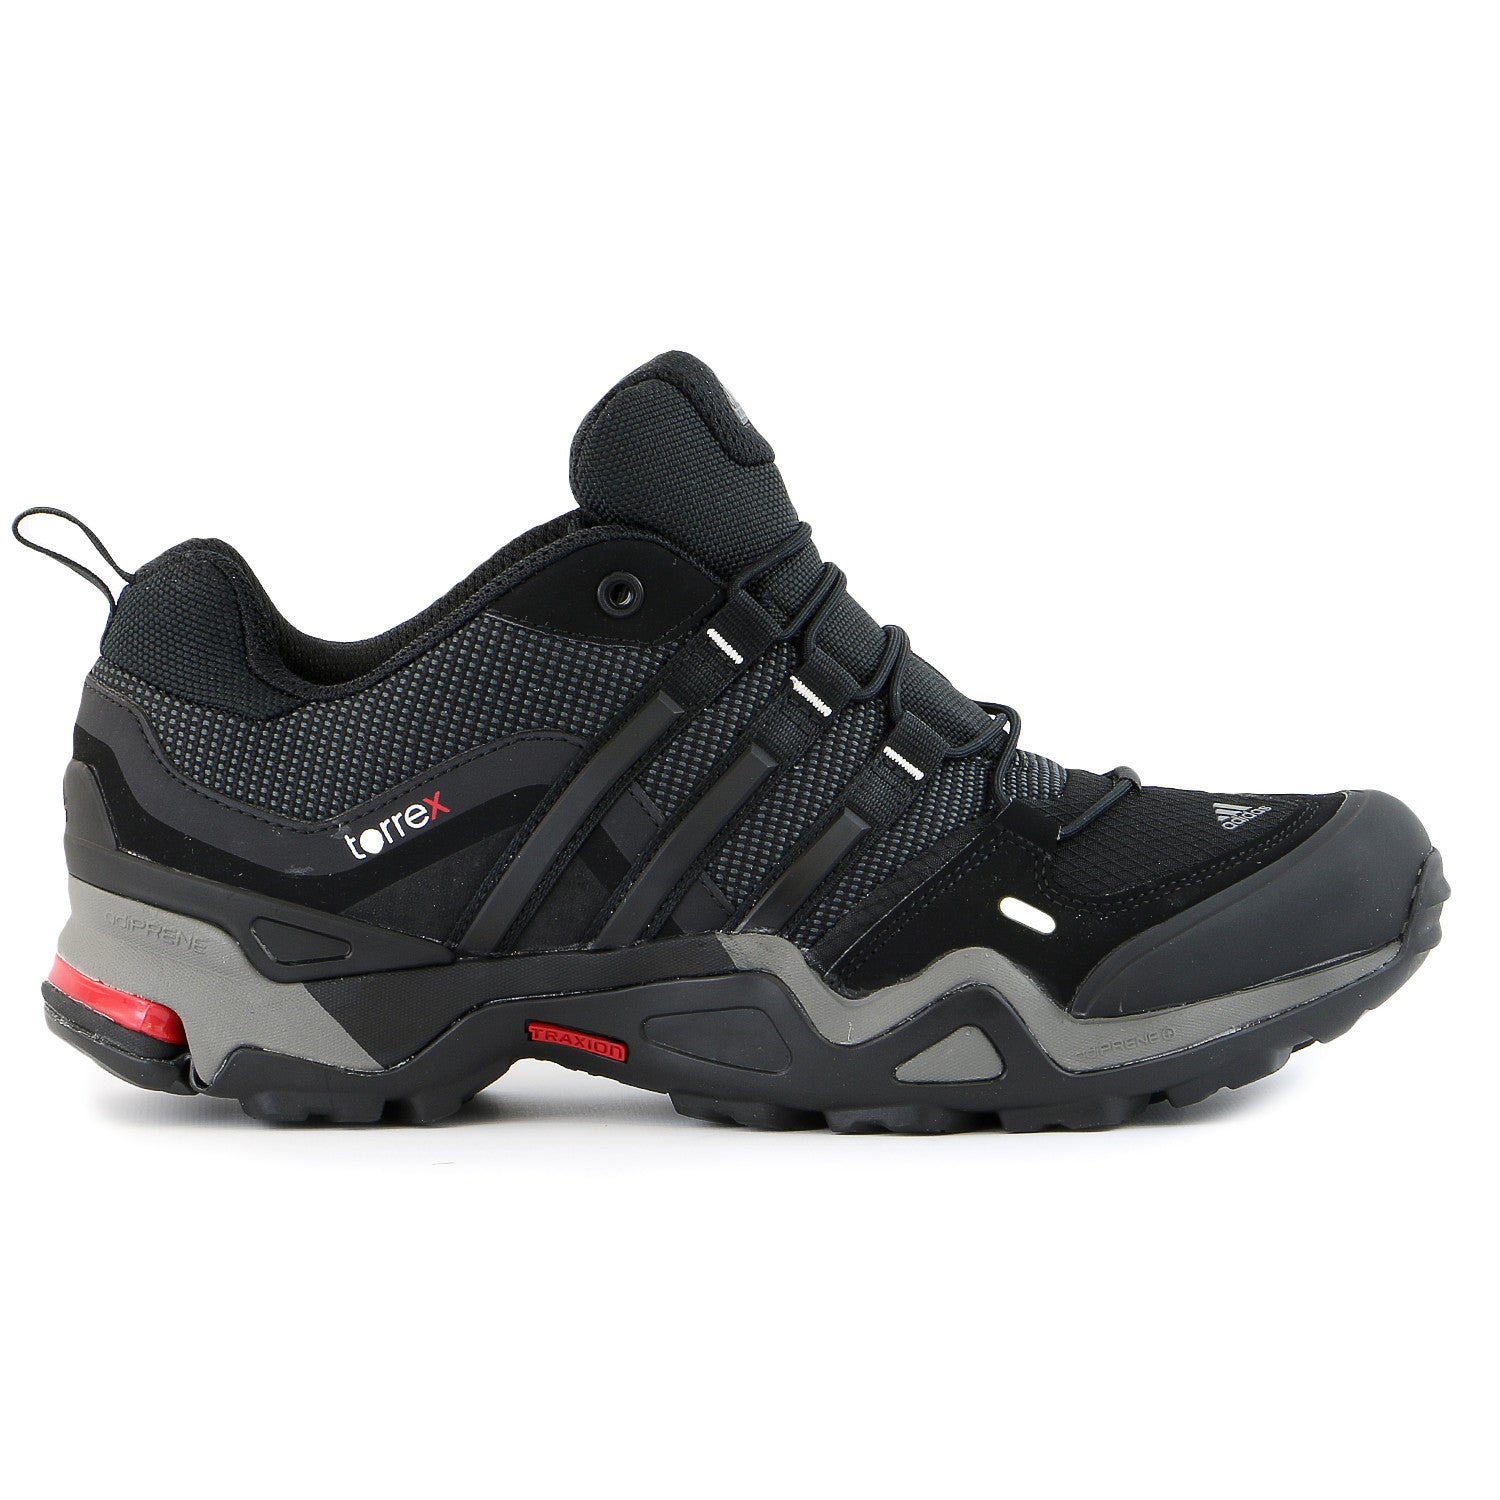 Adidas Outdoor Fast X FM Shoe Carbon/Black/Light Scarl - Shoplifestyle